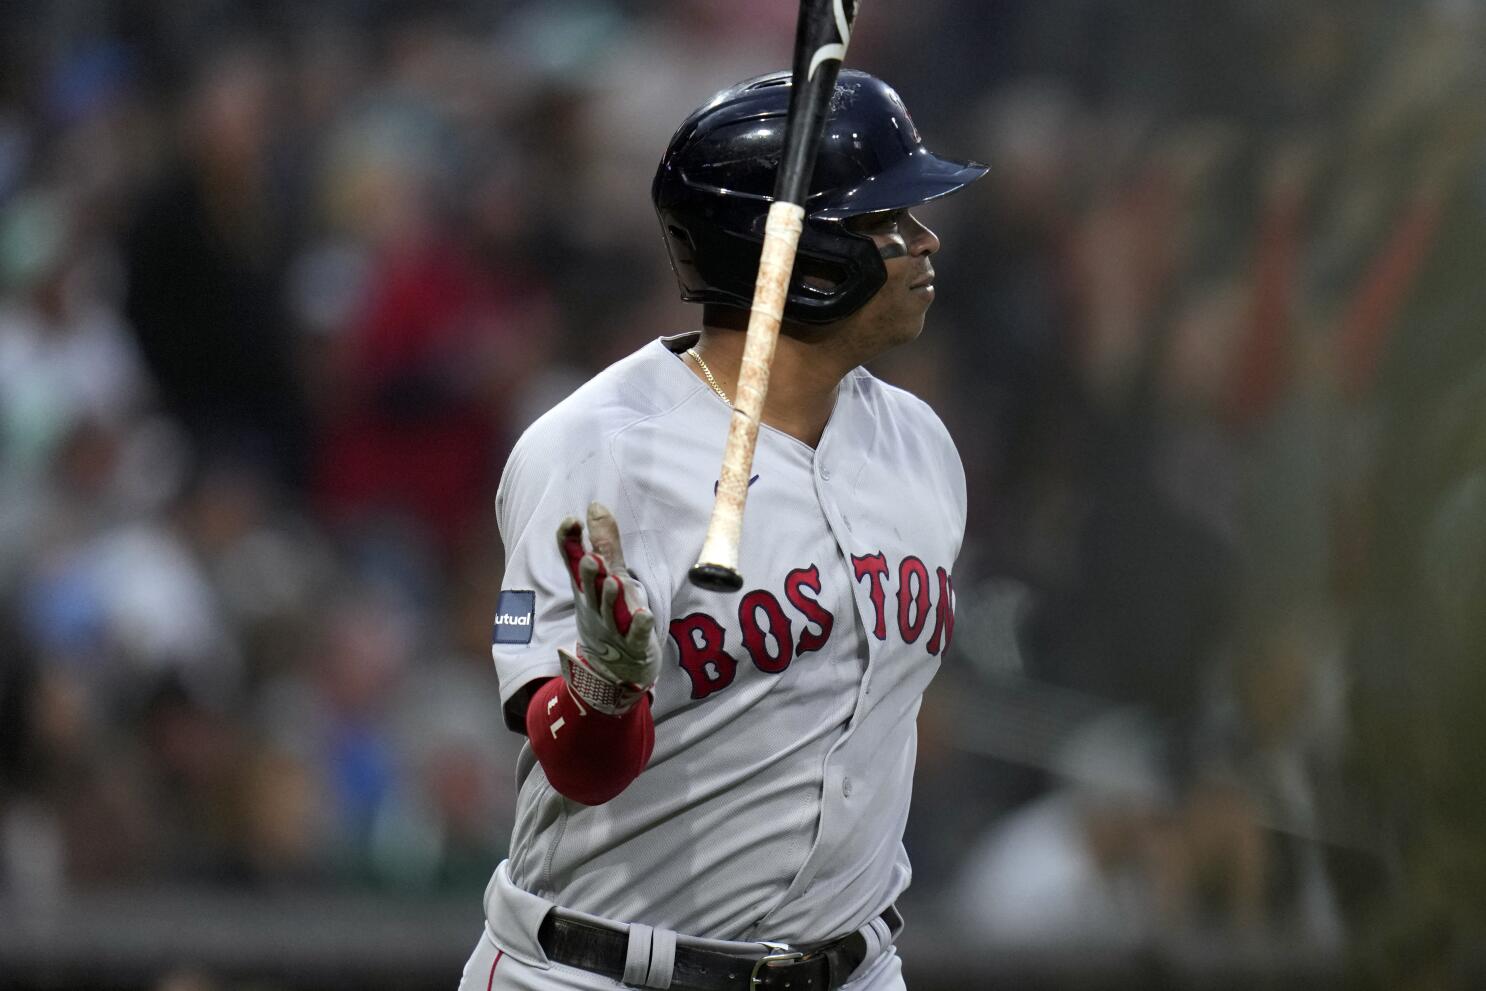 Red Sox: Rafael Devers has been crushing the baseball this season